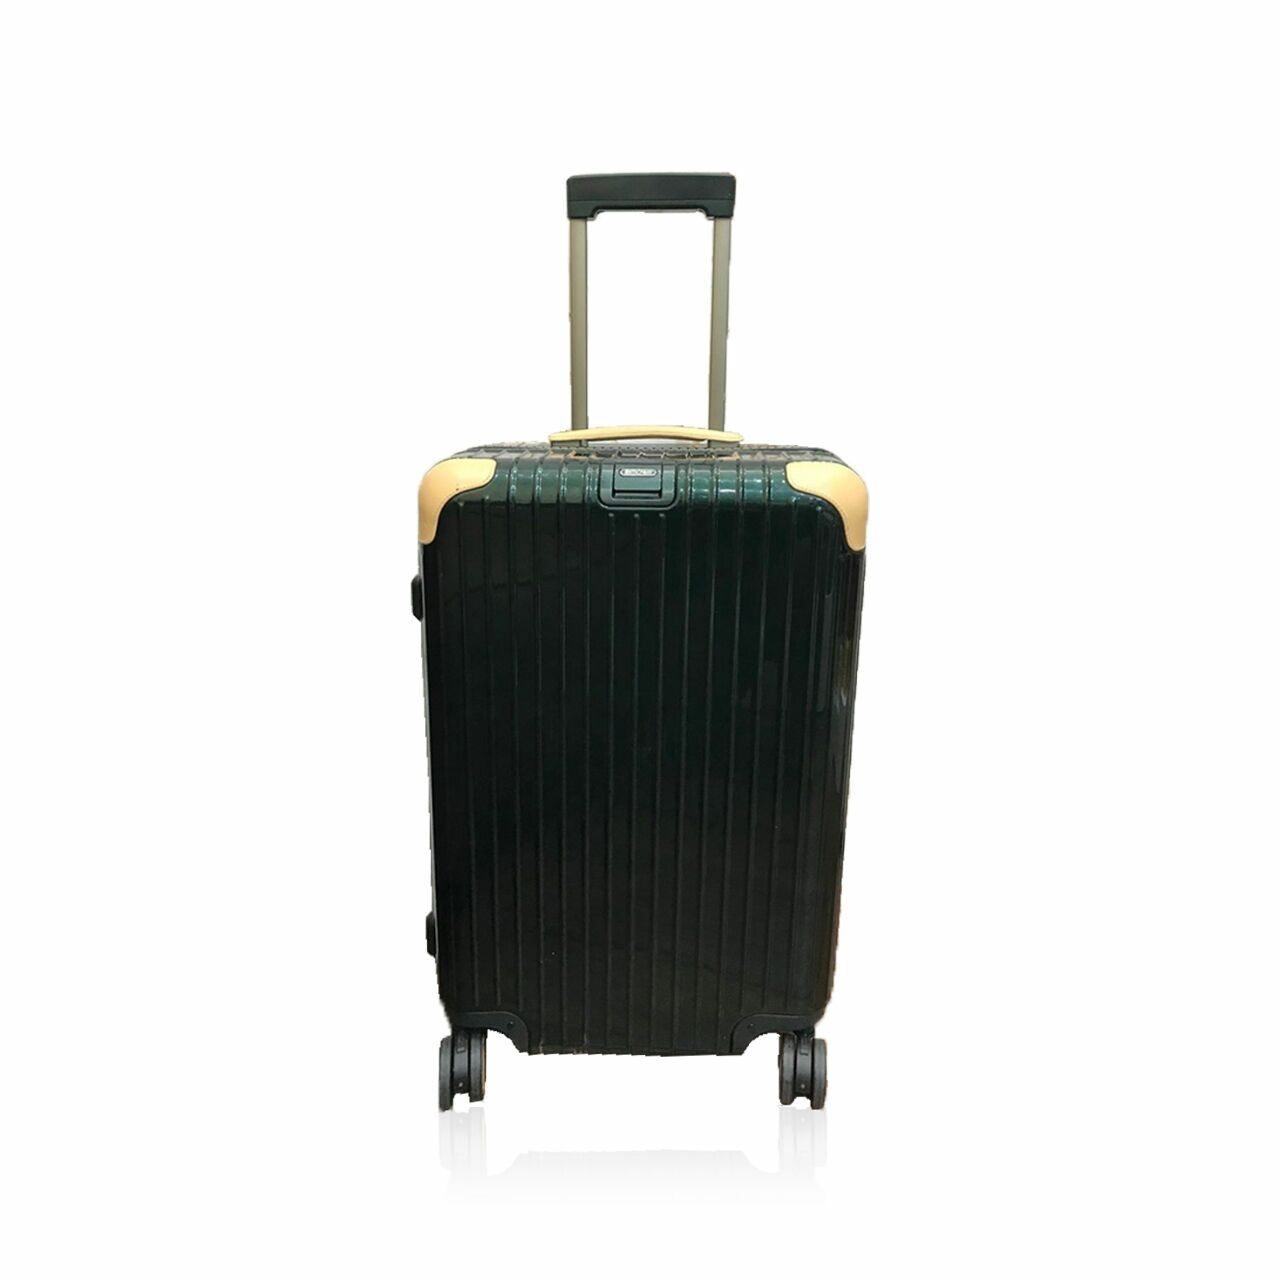  Rimowa Bossa Nova Green MW 63 2018 Luggage and Travel